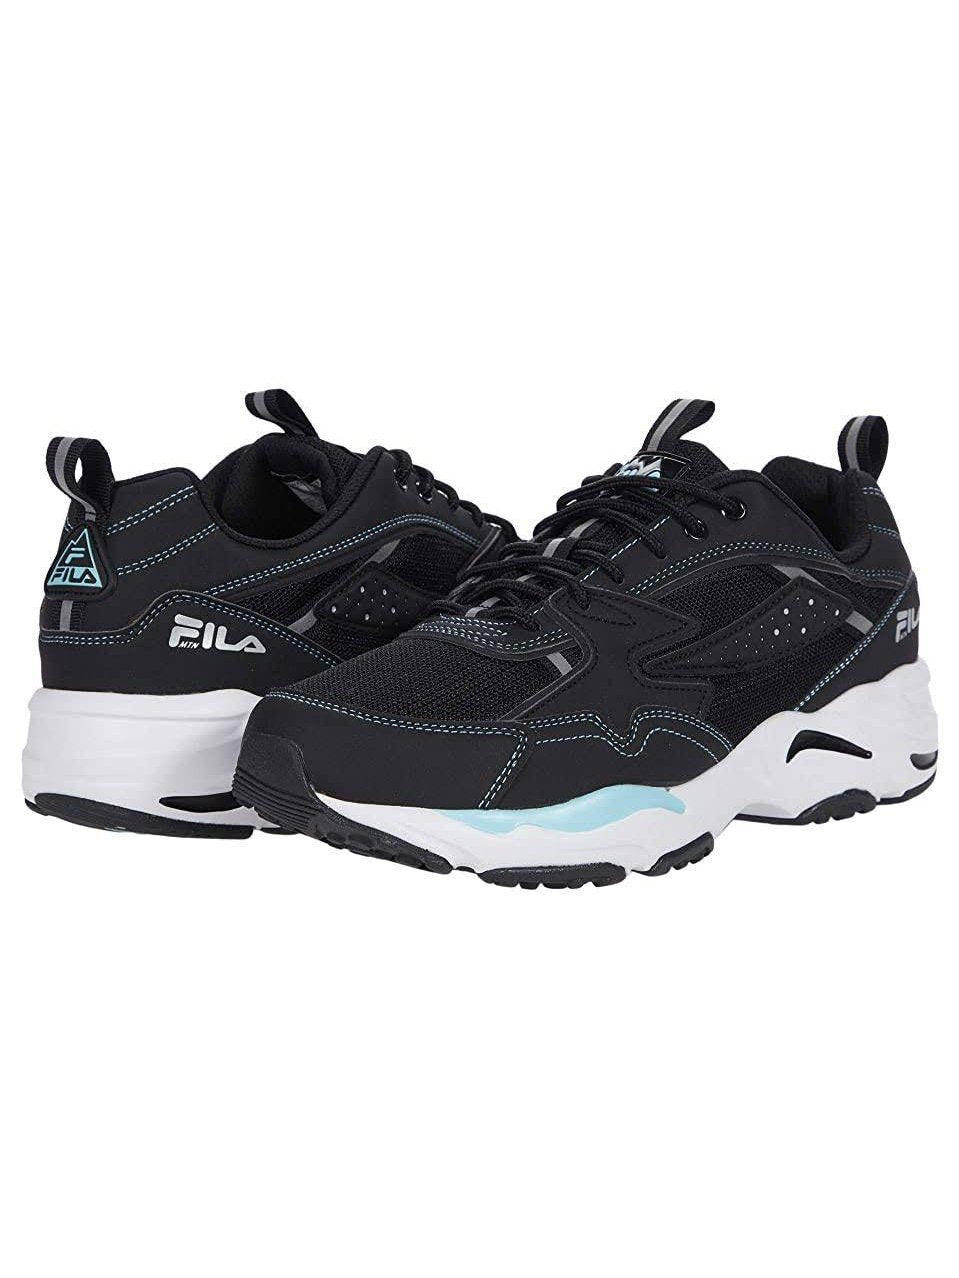 Fila Men's Trail Tracer Sneakers Black Black/White/Metallic Silver 1RM00914-003.